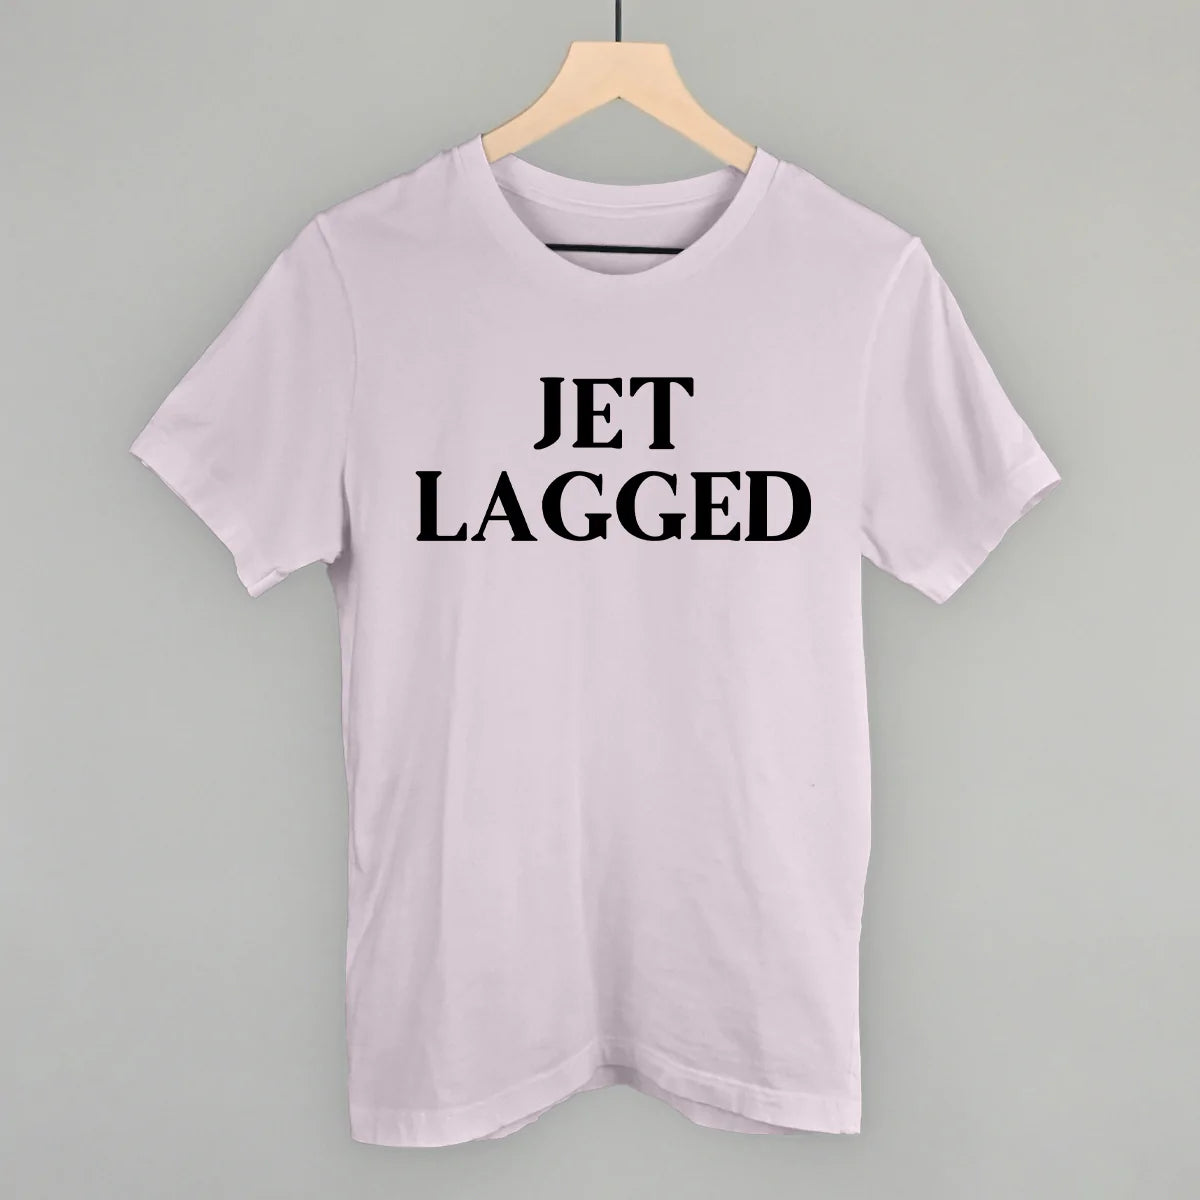 Jet Lagged